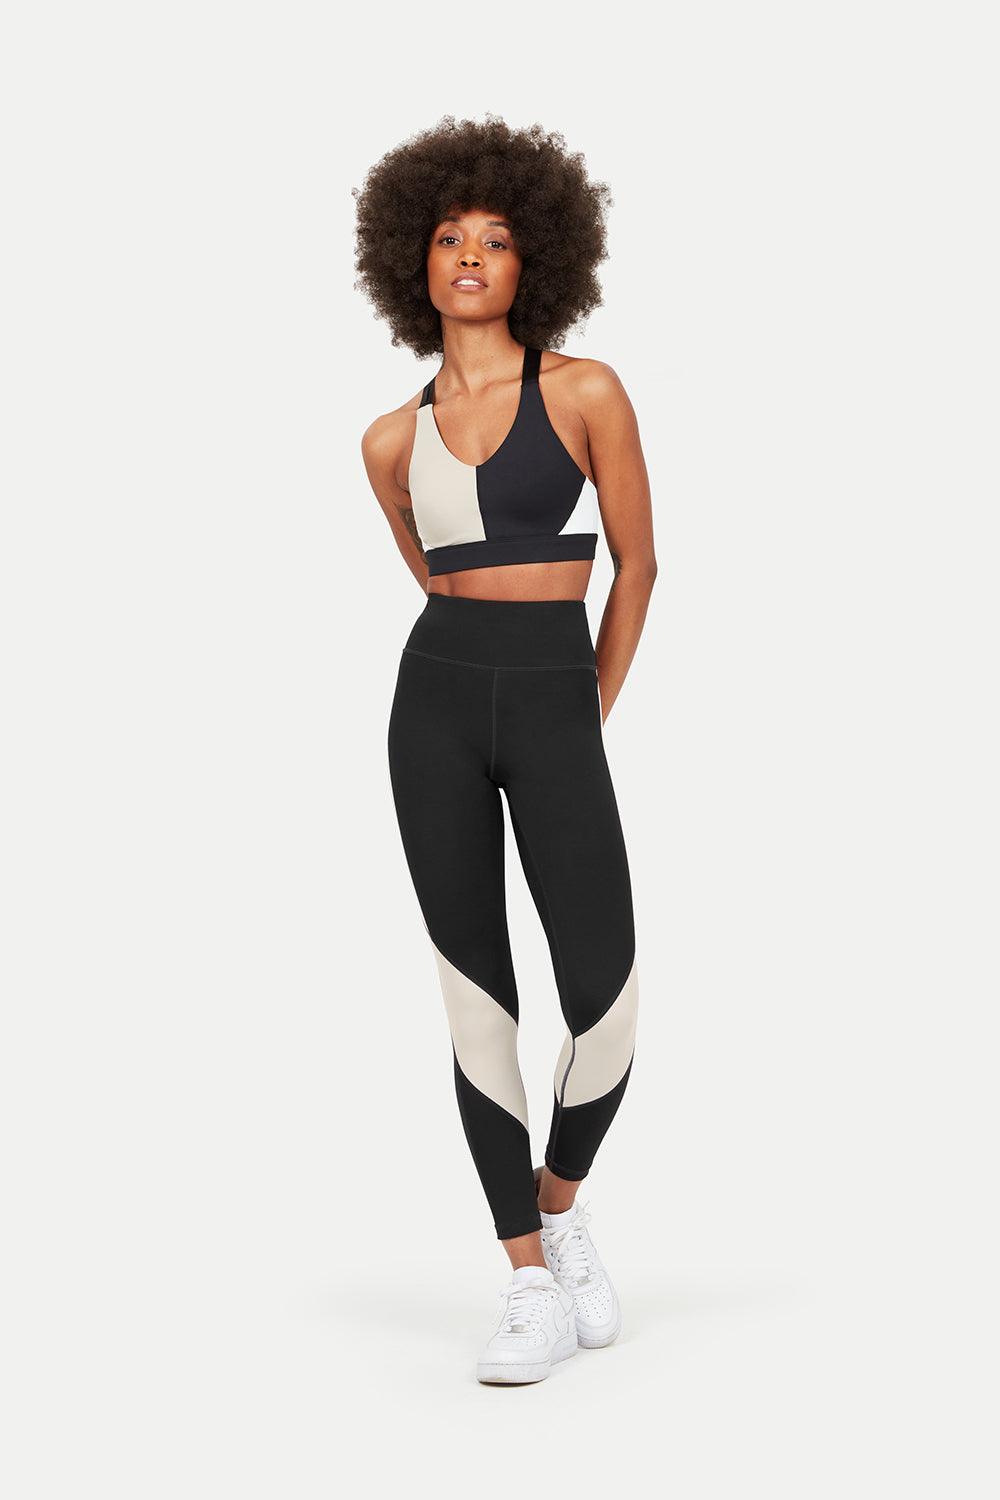 Buy HELISHA Gym wear Leggings Yoga Track Pants for Girls  Women BlackPack  of 2 FREESIZE2632 WAISTSIZE Black With BlueLineWhiteLine  FreeSize2632 Waist online  Looksgudin